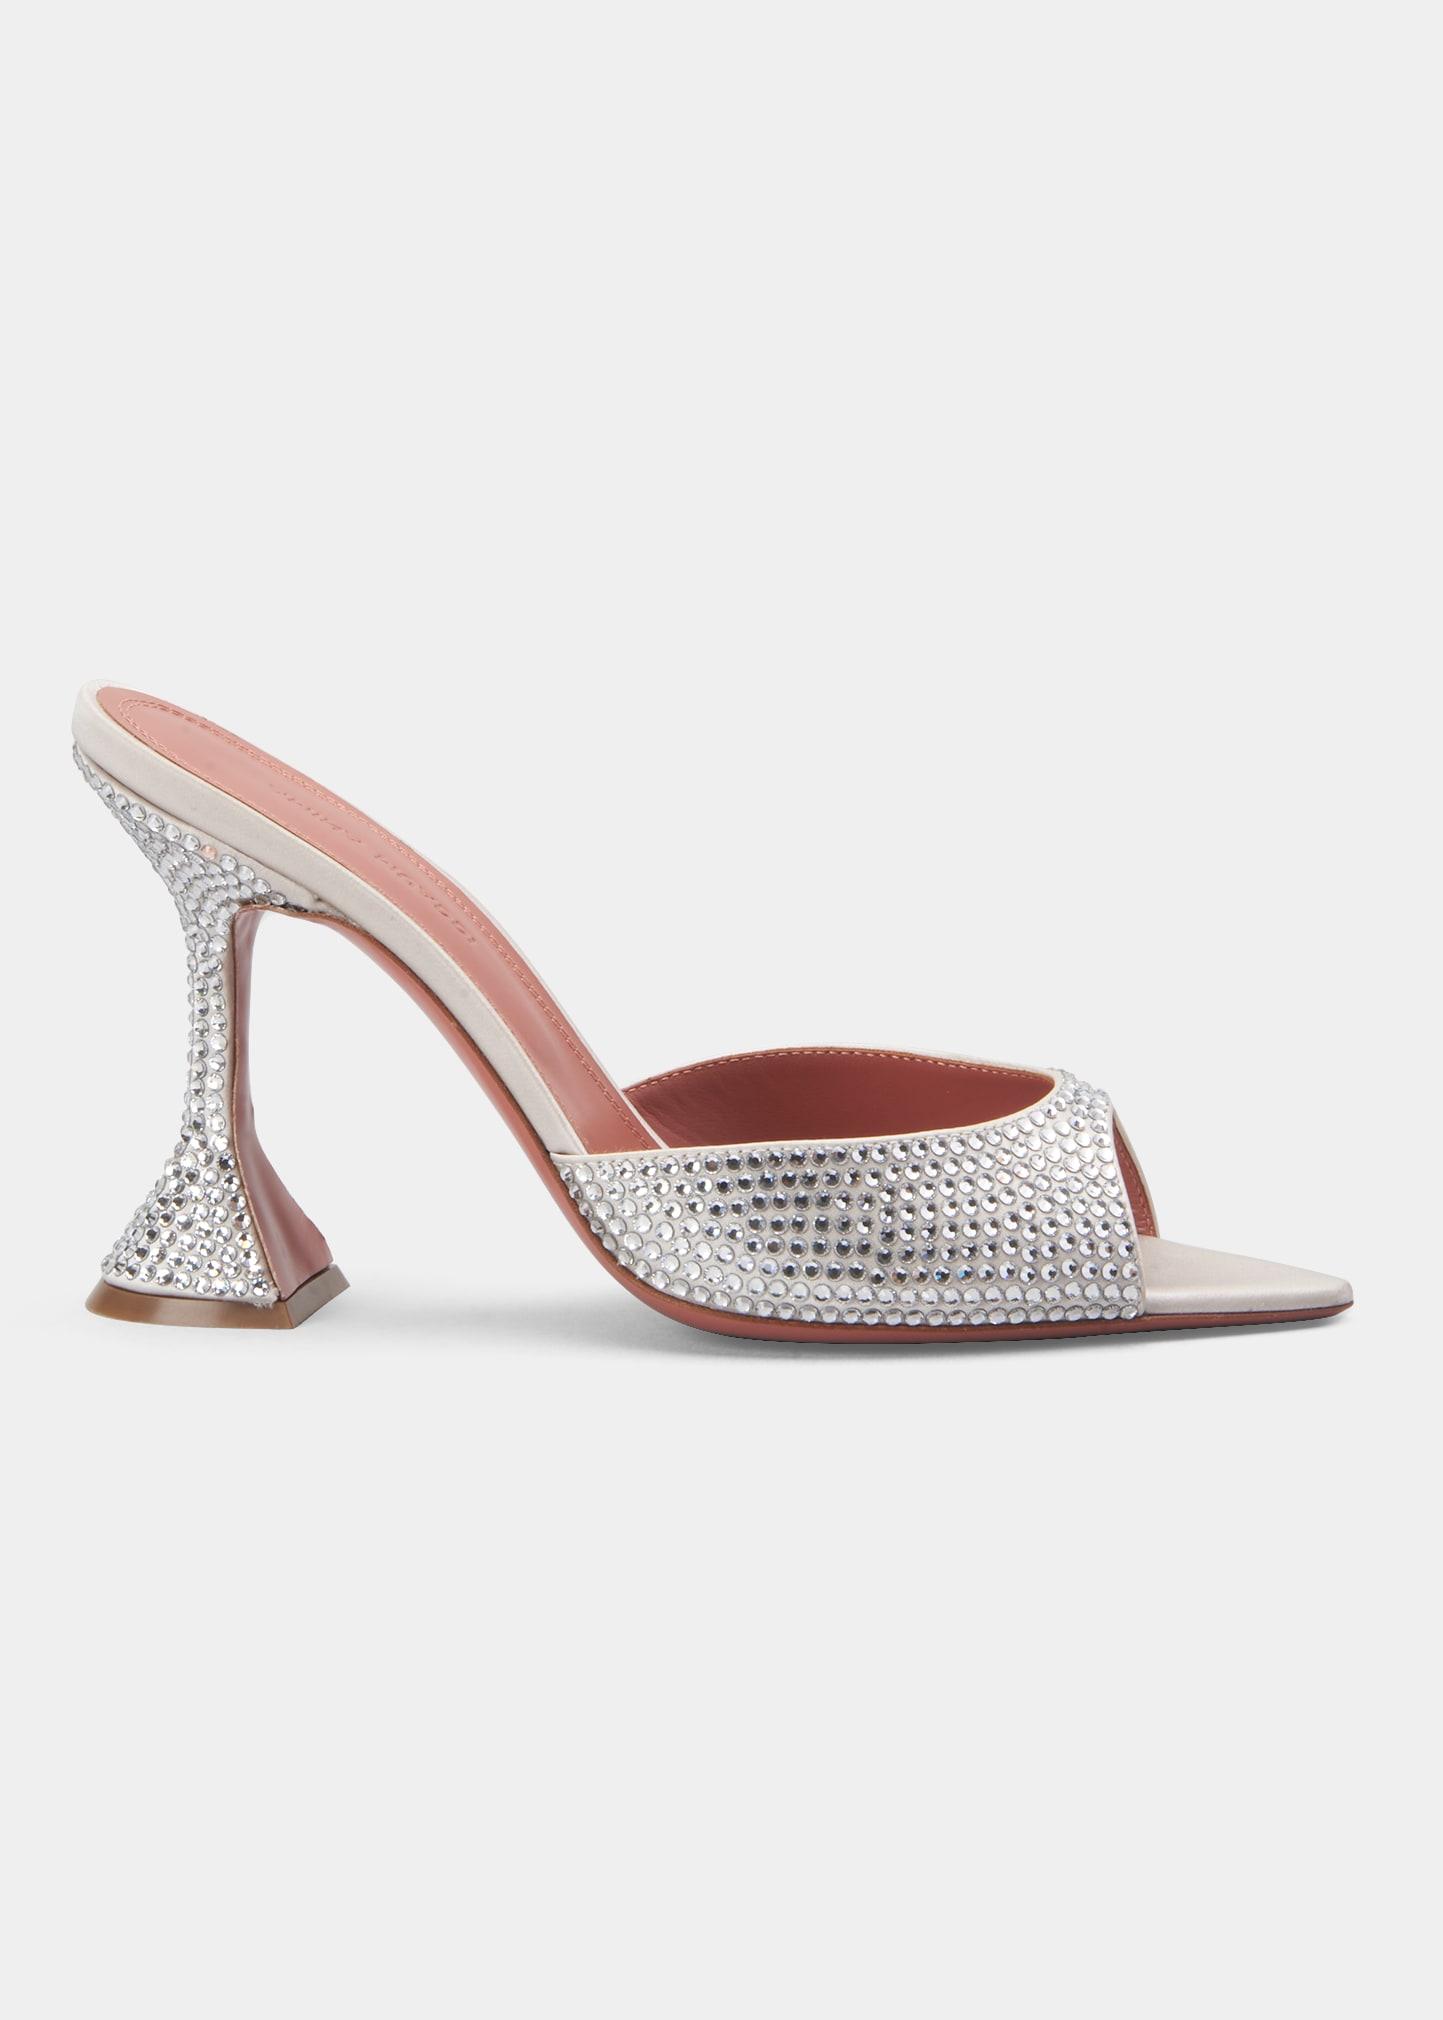 AMINA MUADDI Caroline Crystal Mule Sandals in Pink | Lyst